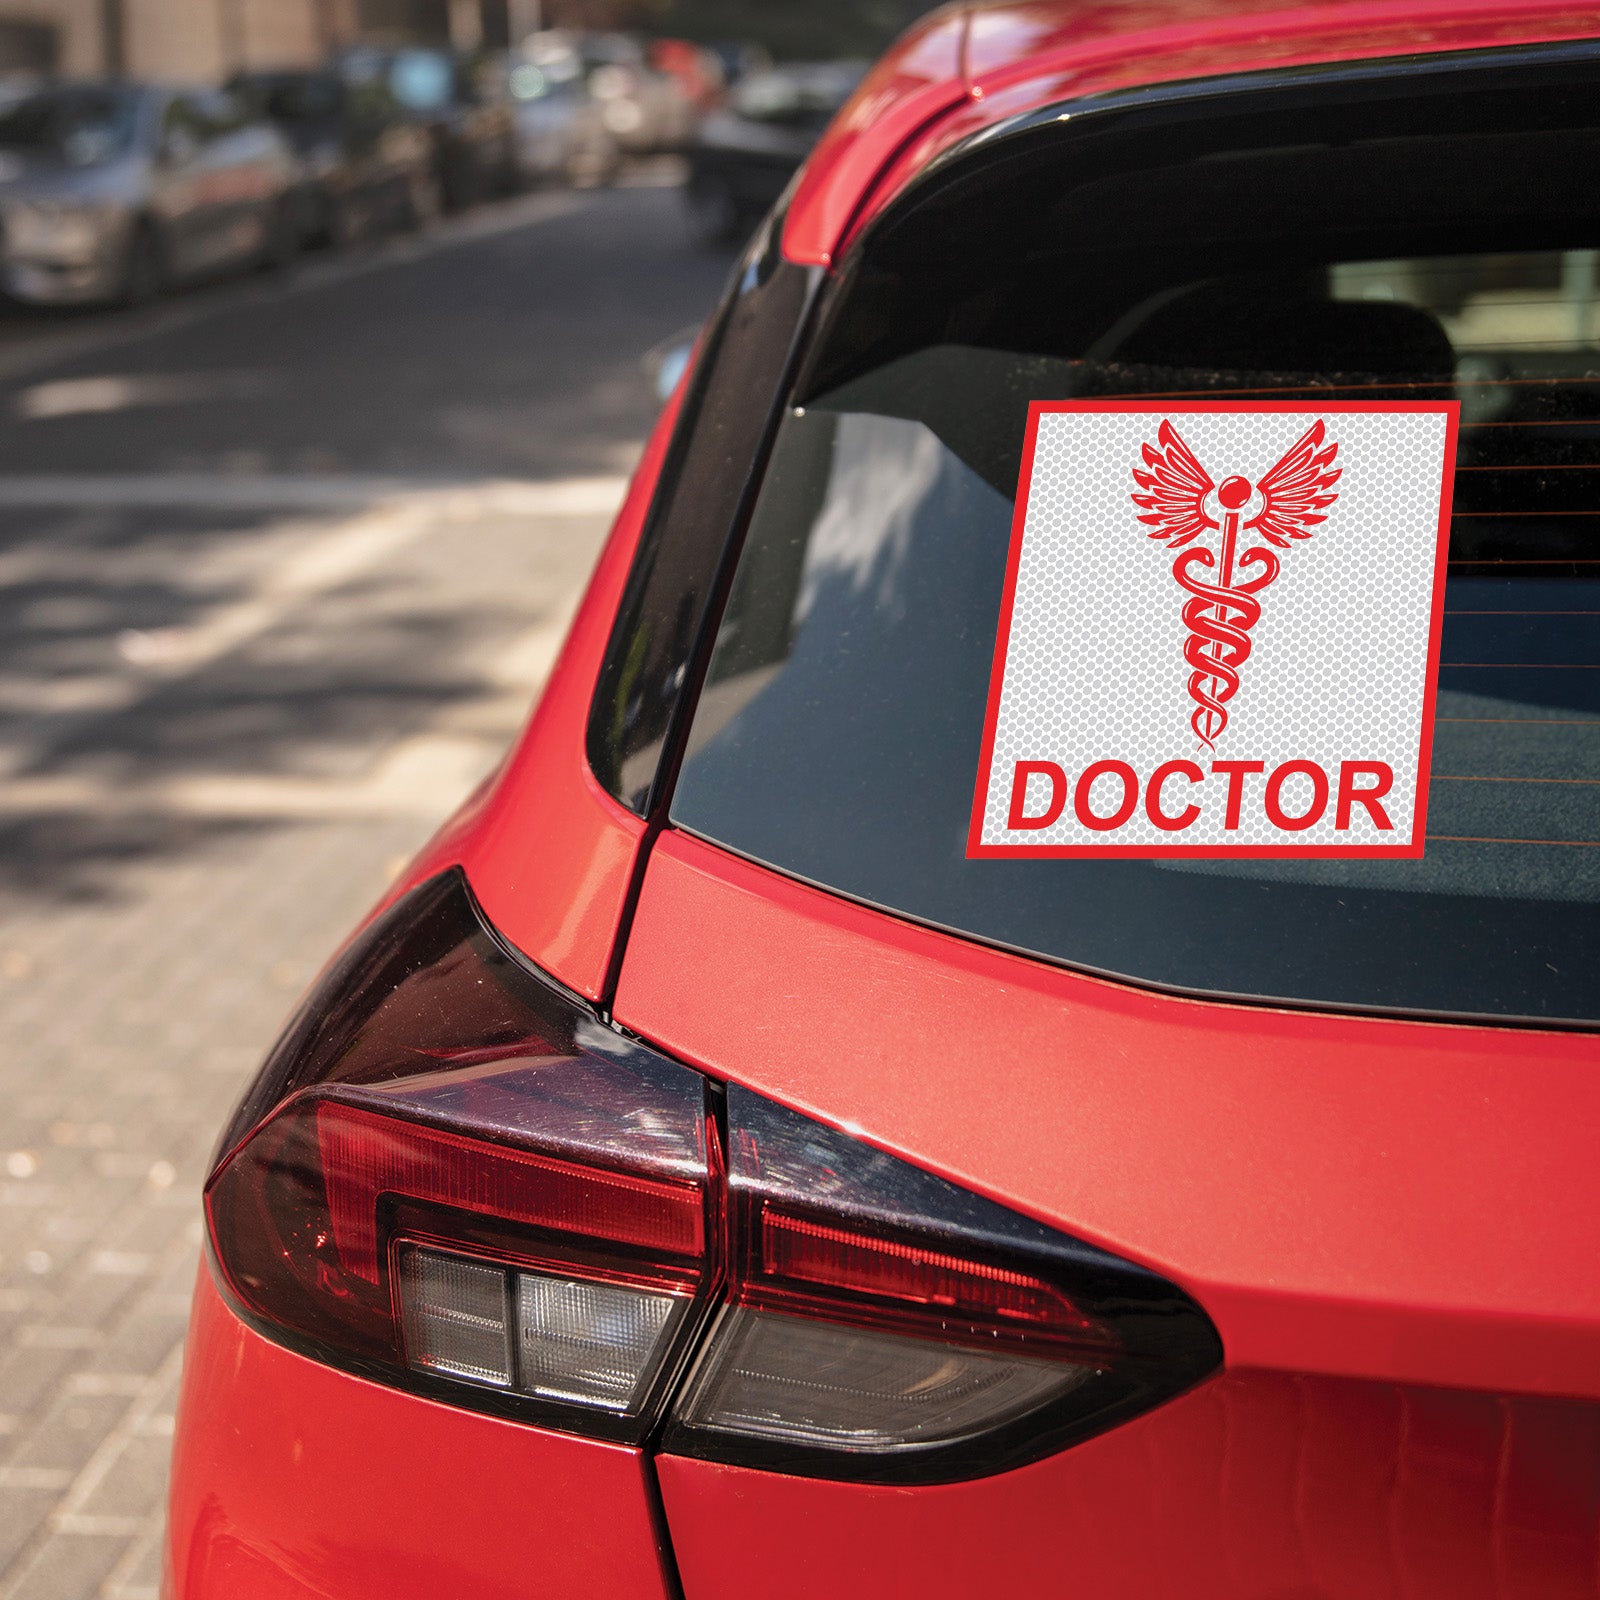 The Car Doctor - Logo Design by Muhammad Imran Samoon on Dribbble